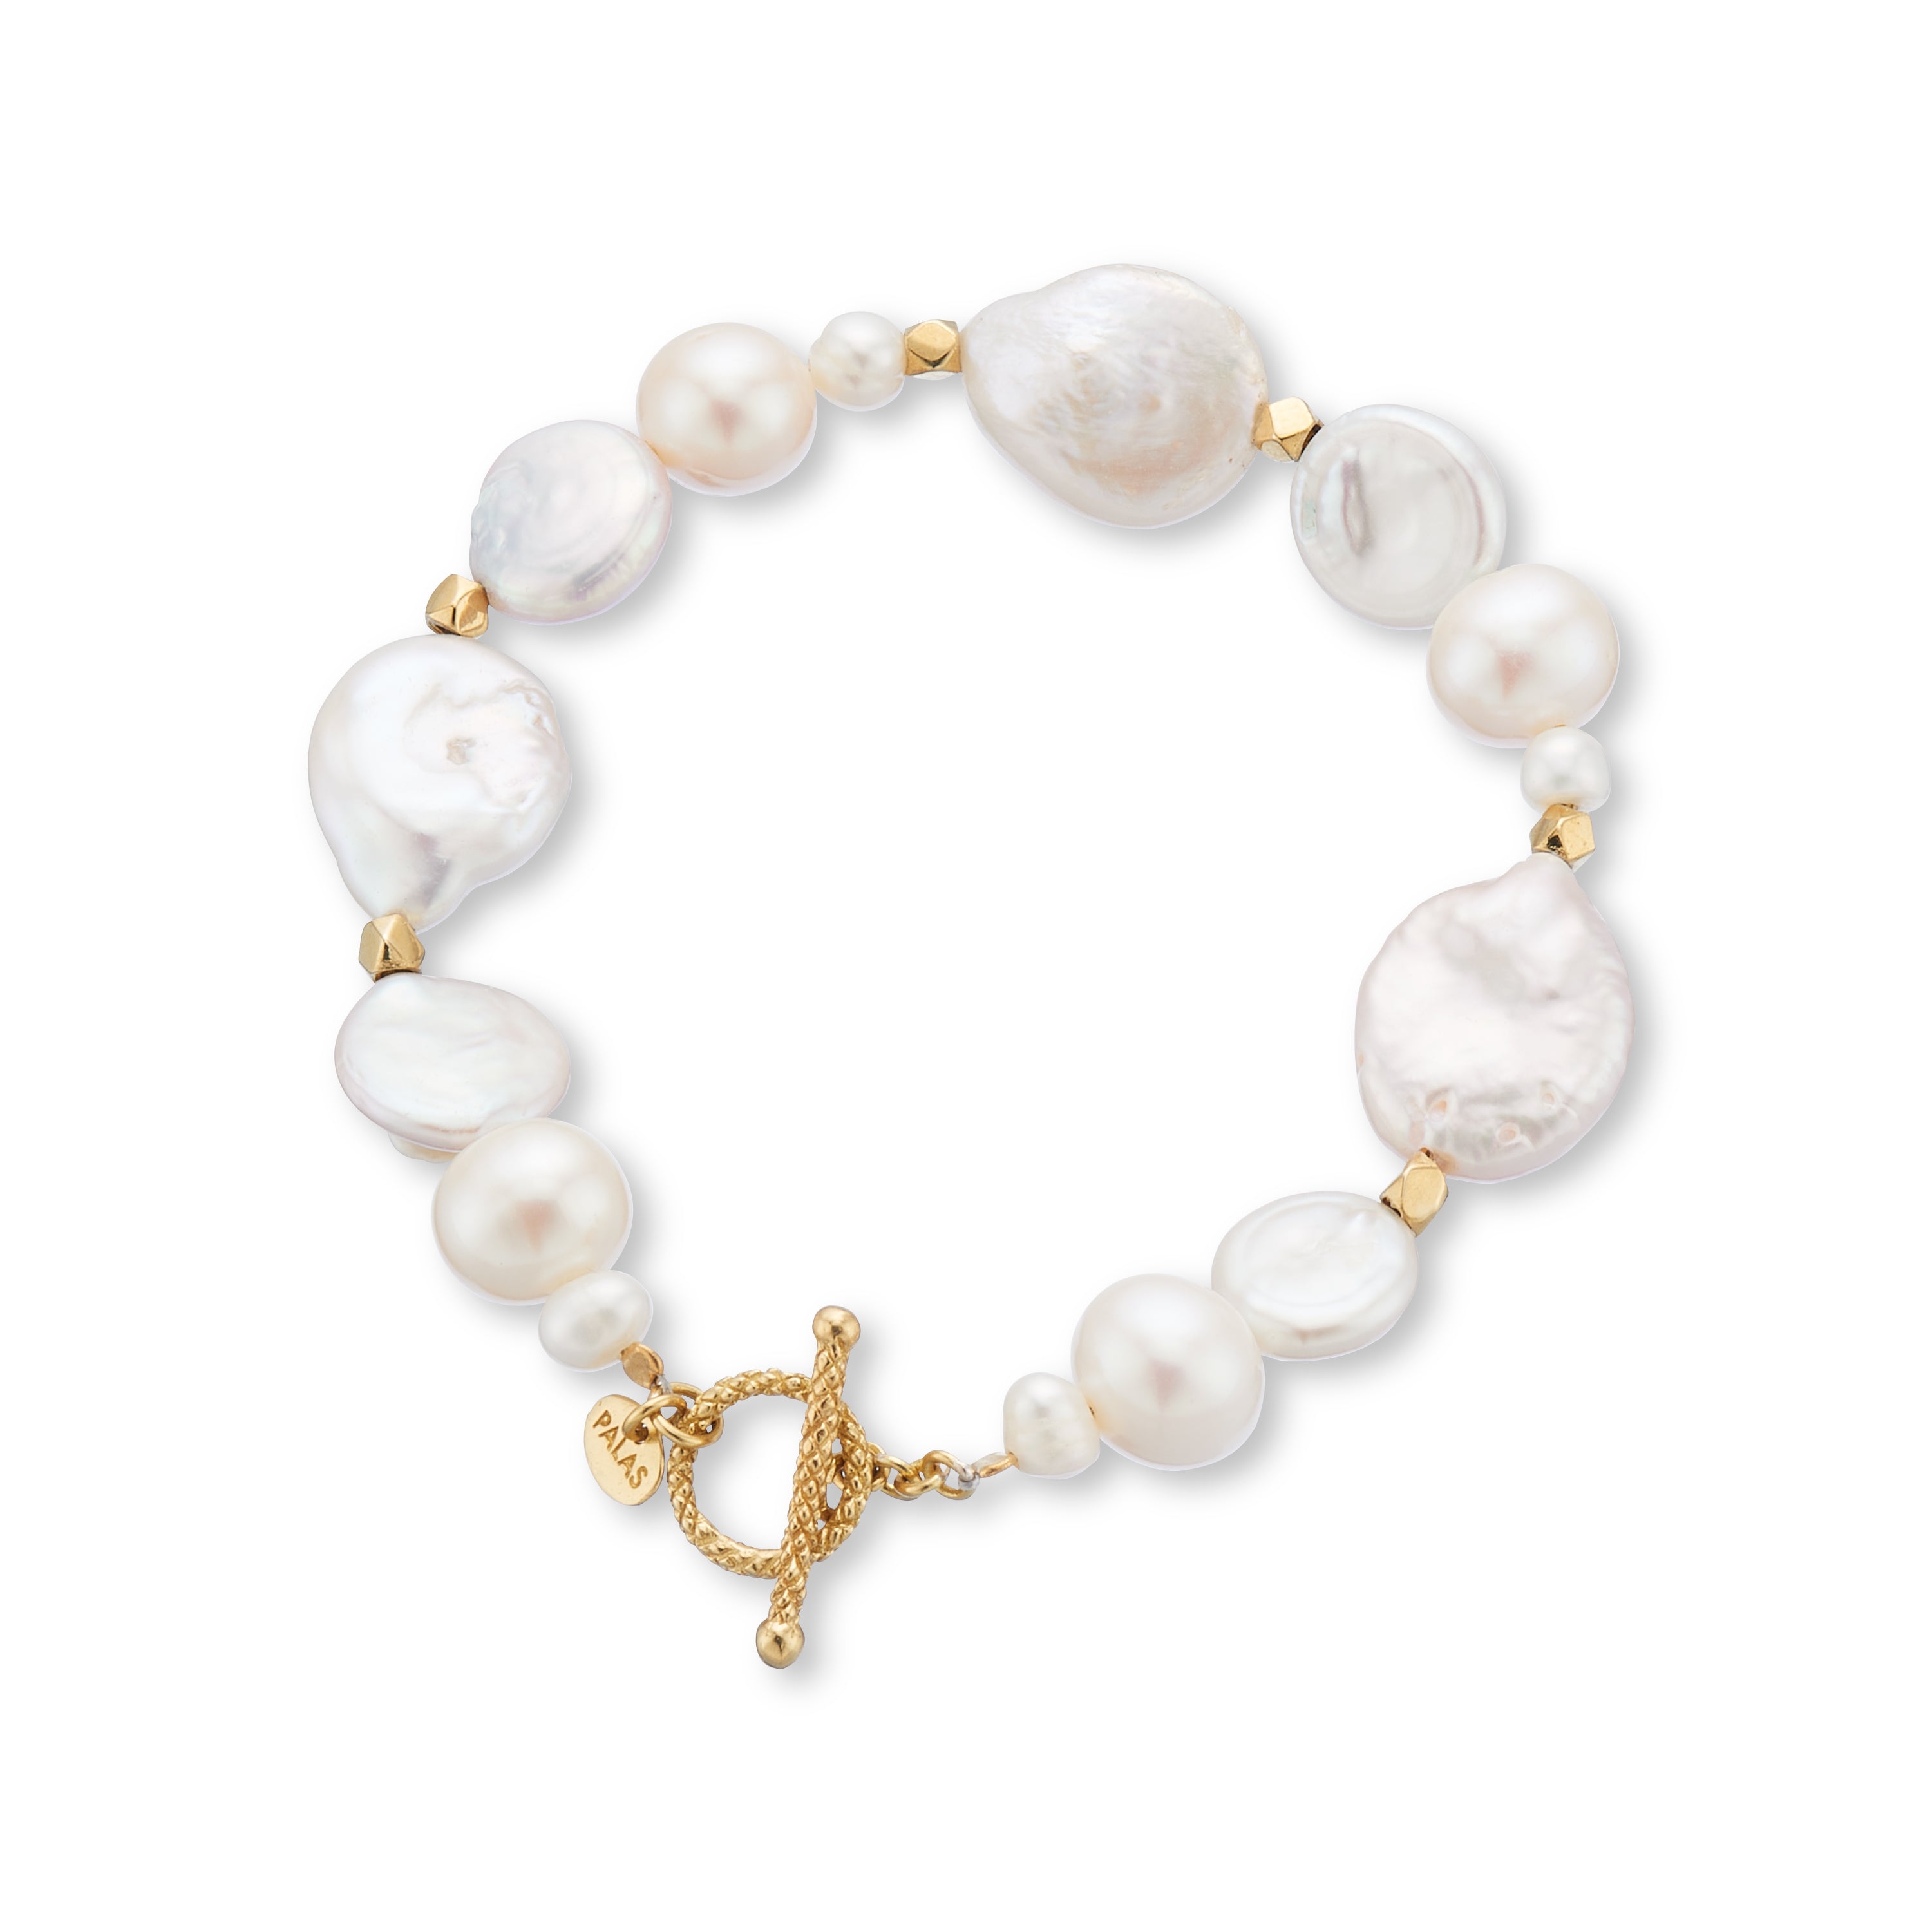 Ocean treasure pearl fob bracelet